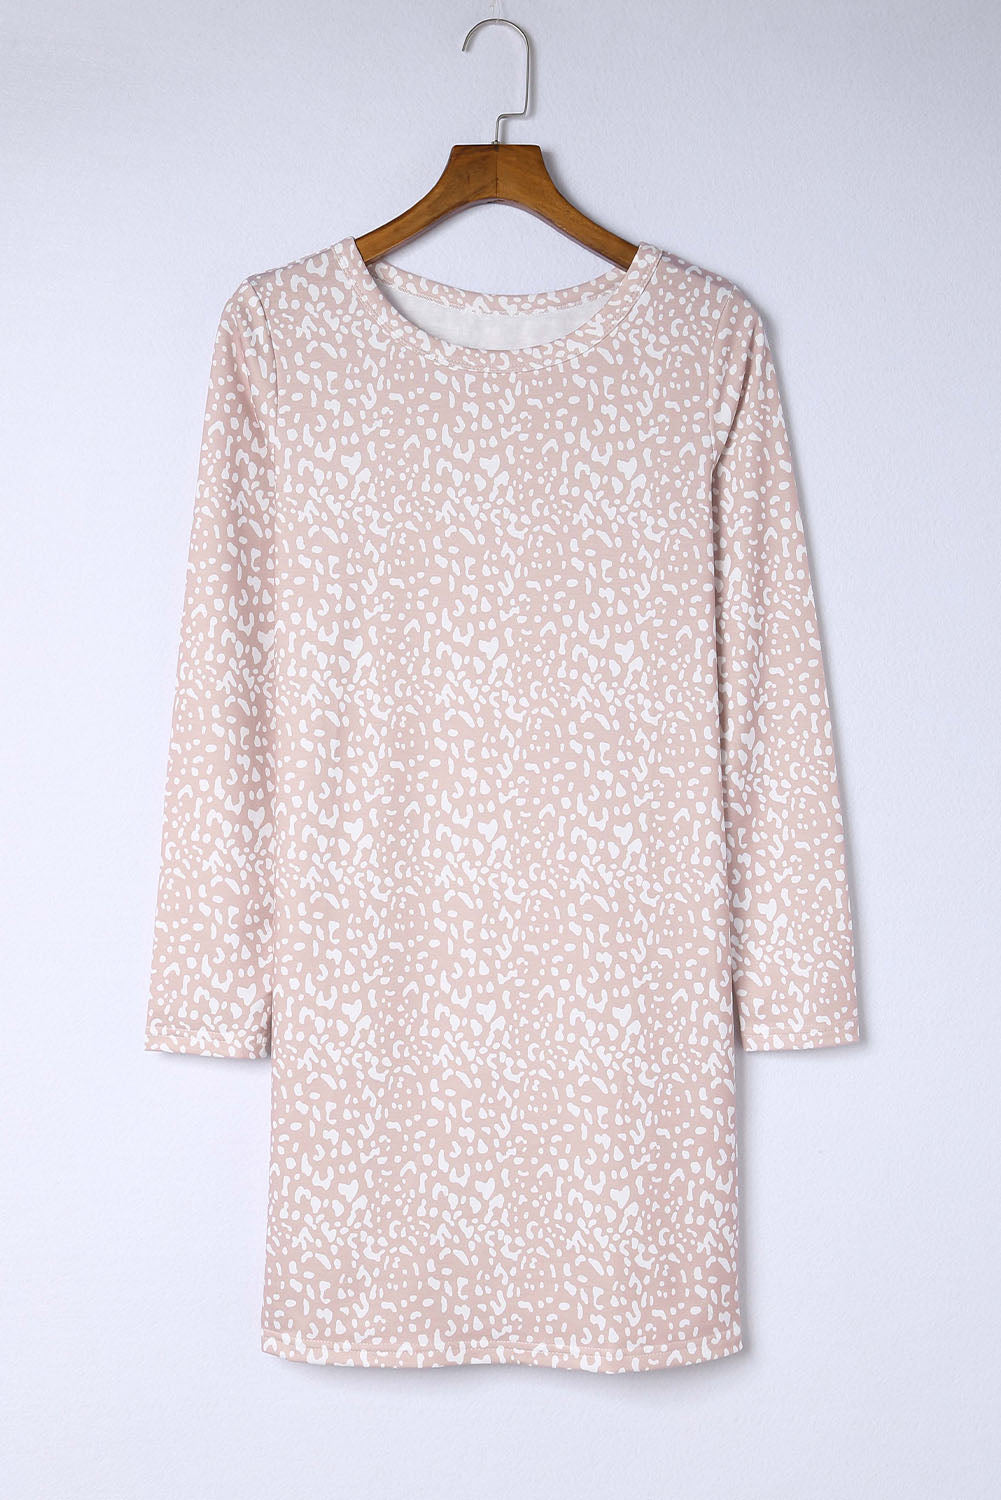 Long Sleeve Animal Print T-shirt Dress T Shirt Dresses JT's Designer Fashion